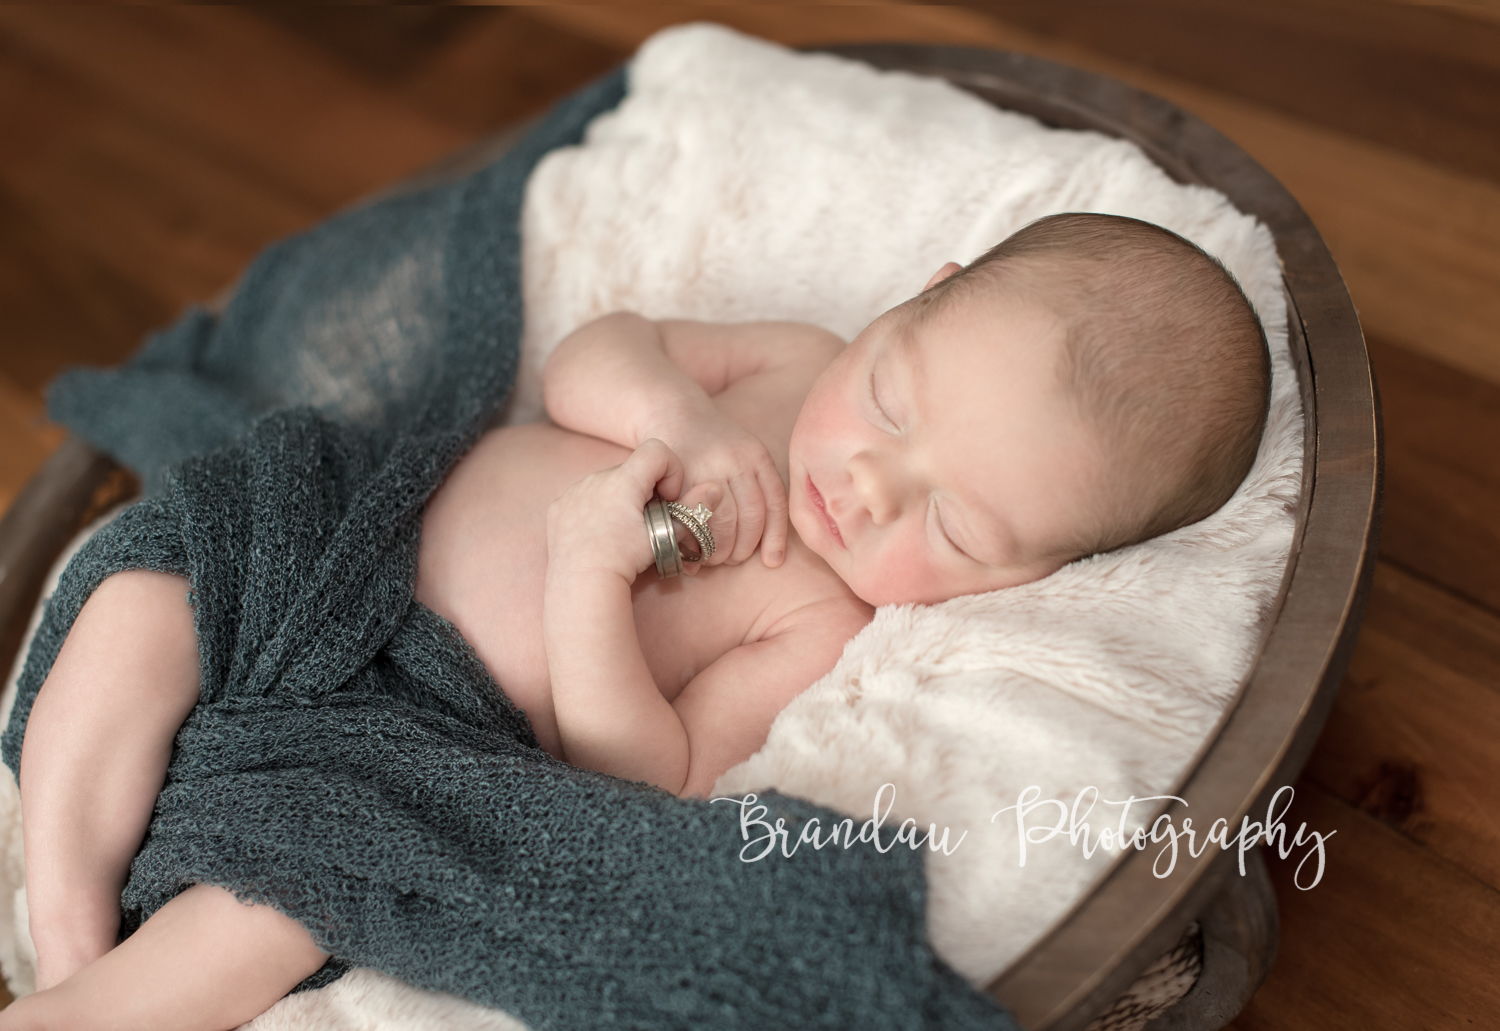 Brandau Photography - Central Iowa Newborn 050816-21.jpg